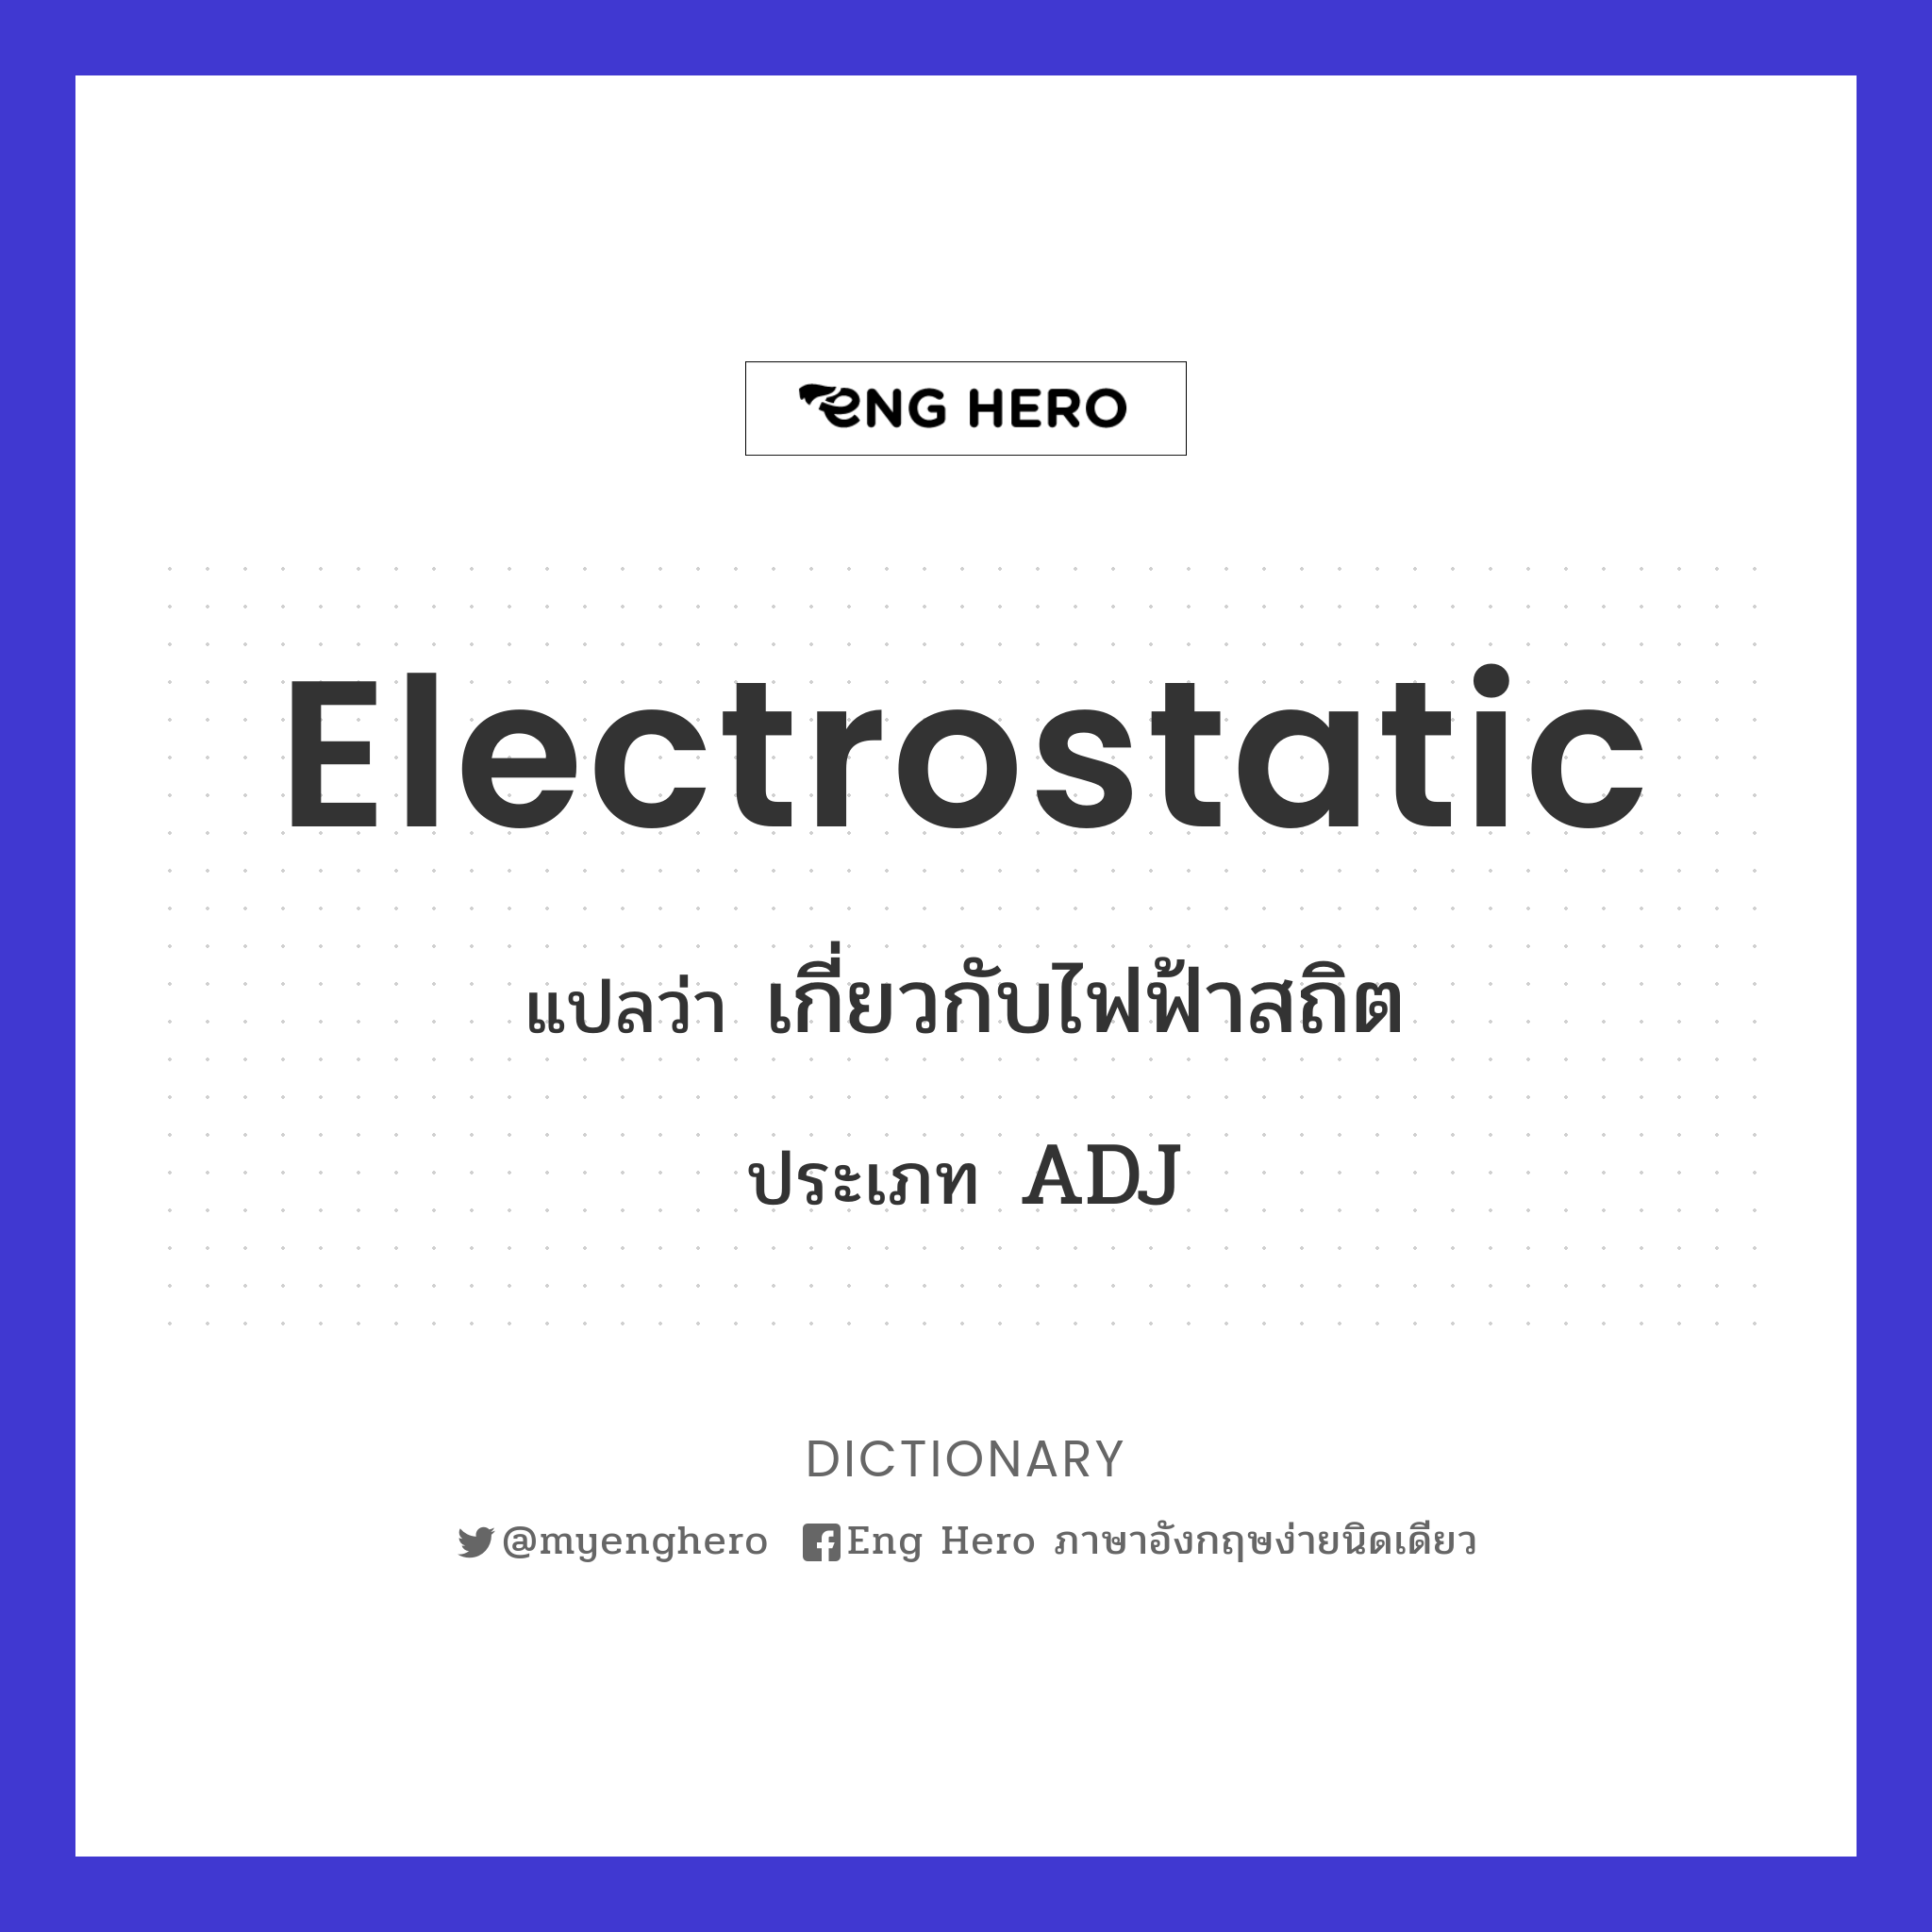 electrostatic